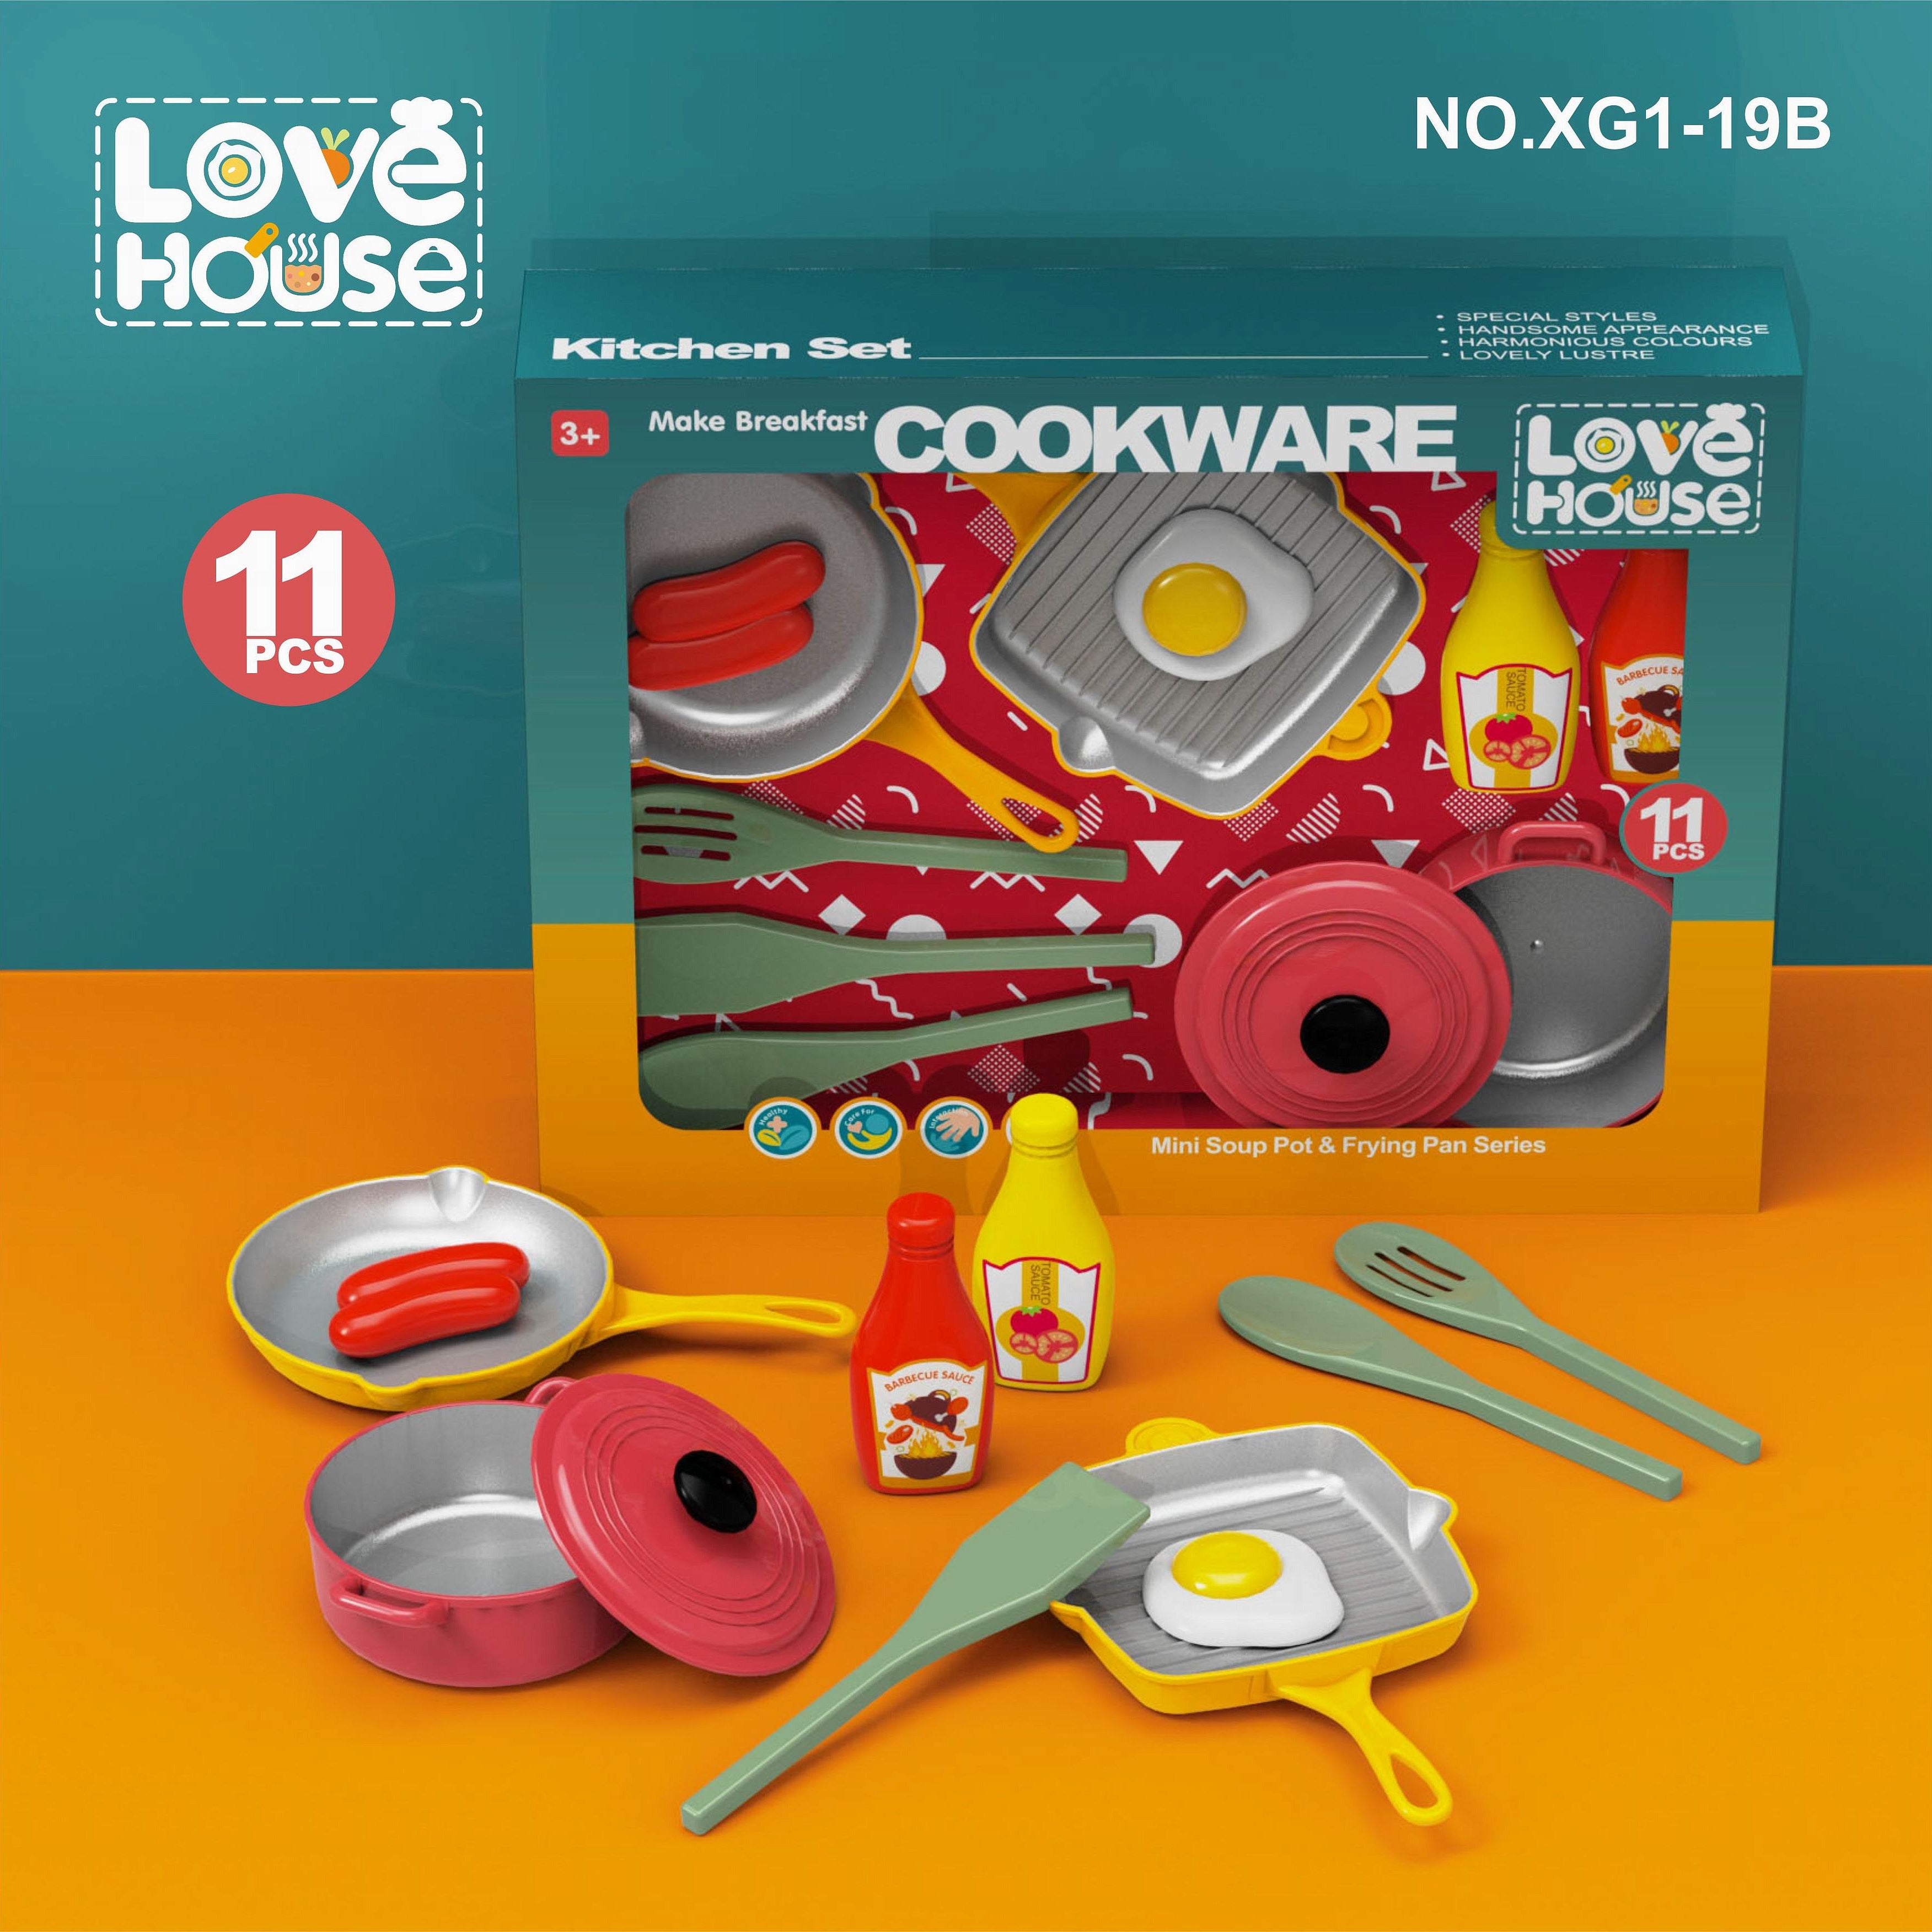 Love House Make Breakfast Cookware Kitchen Set - XG1-19B